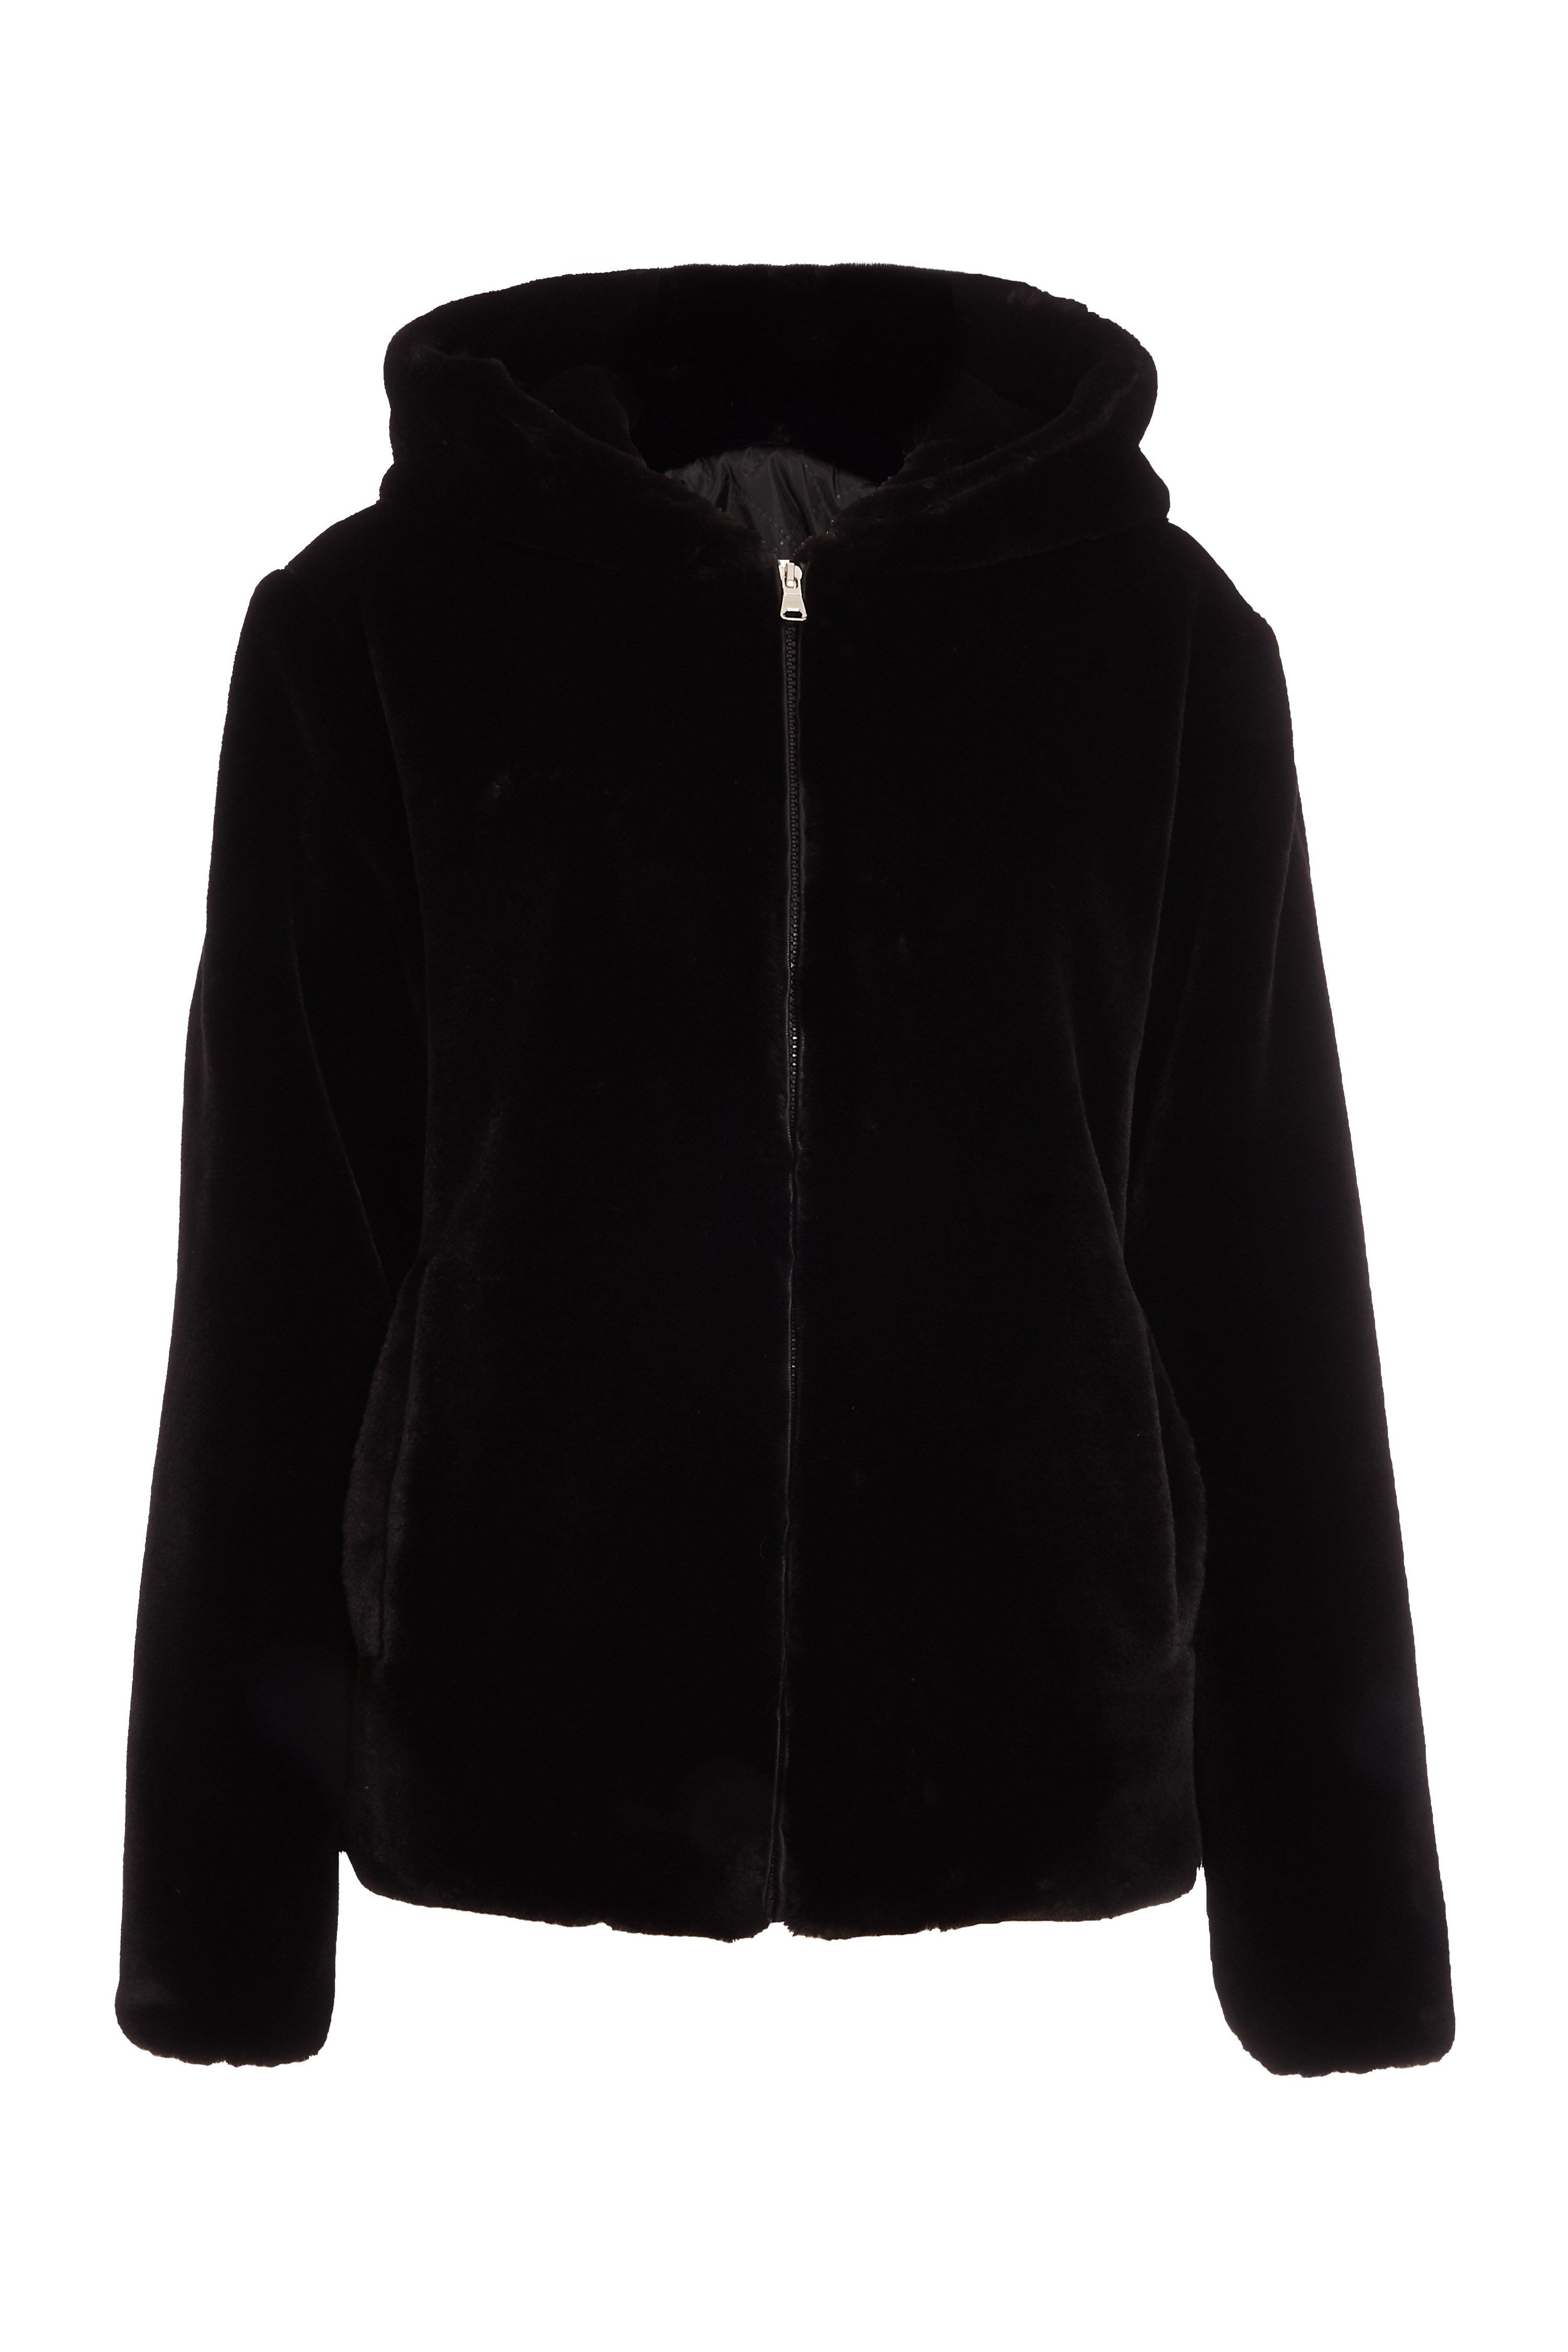 Black Faux Fur Hooded Jacket - Quiz Clothing